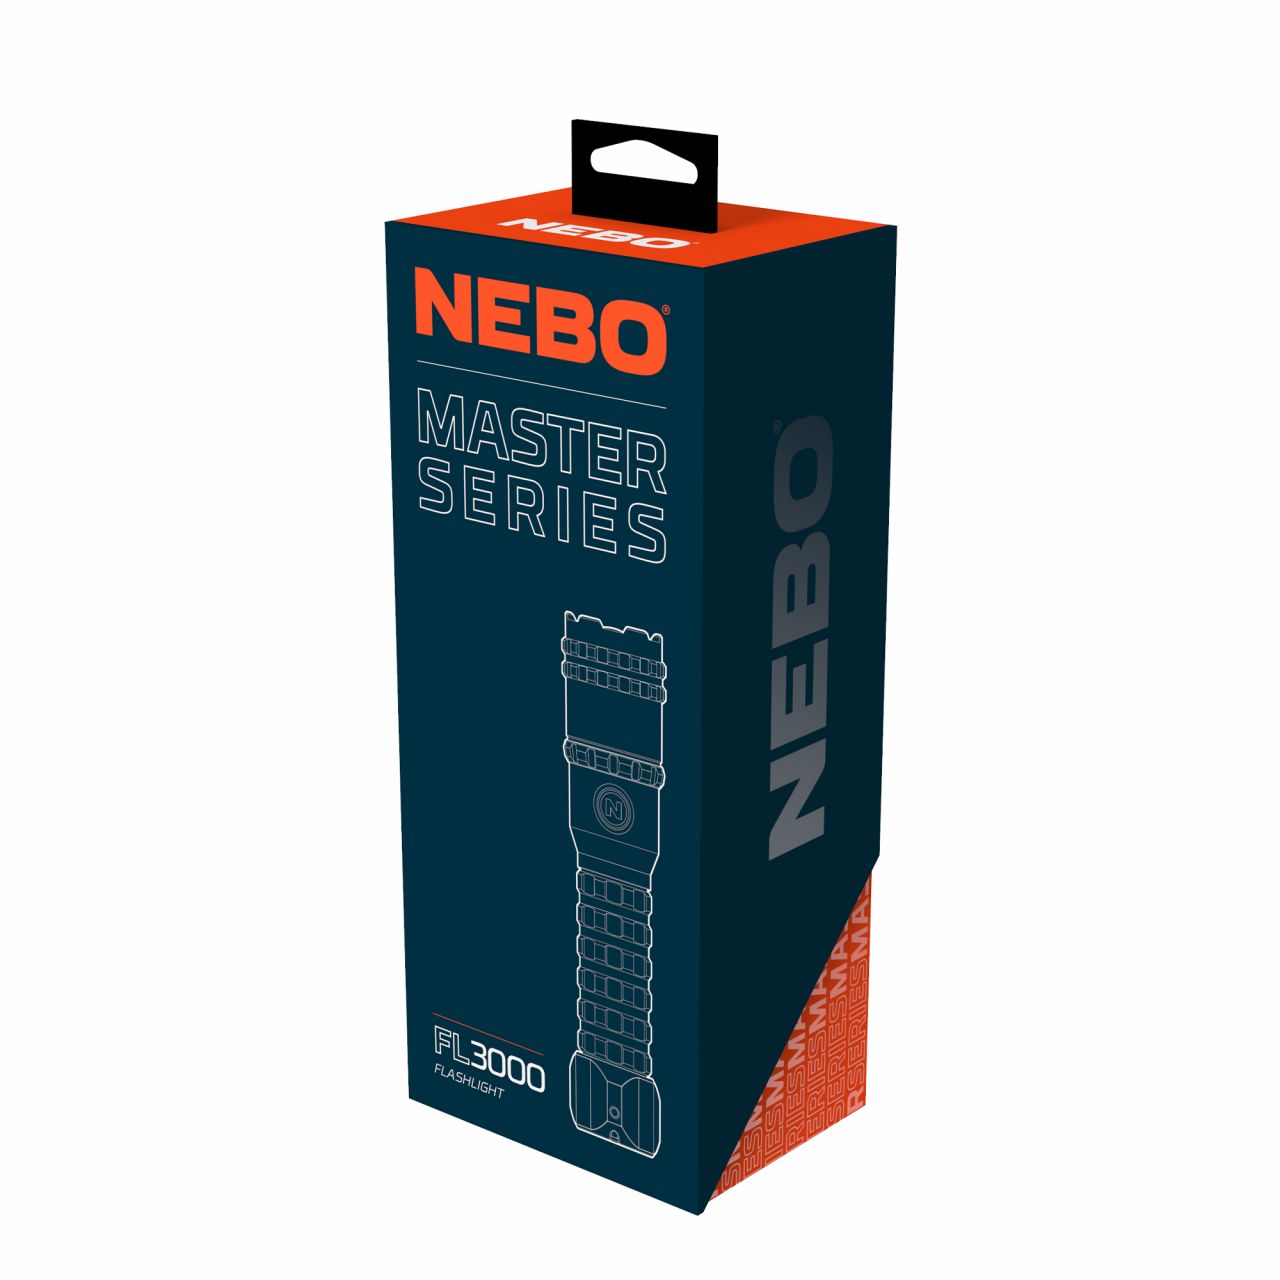 NEBO Master Series FL3000